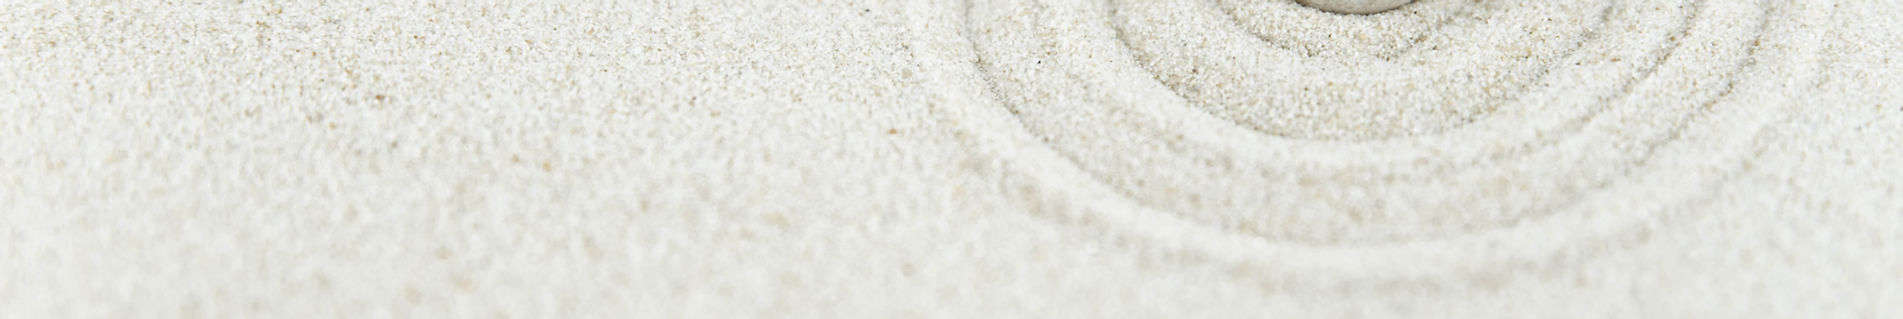 White Sand and Stone